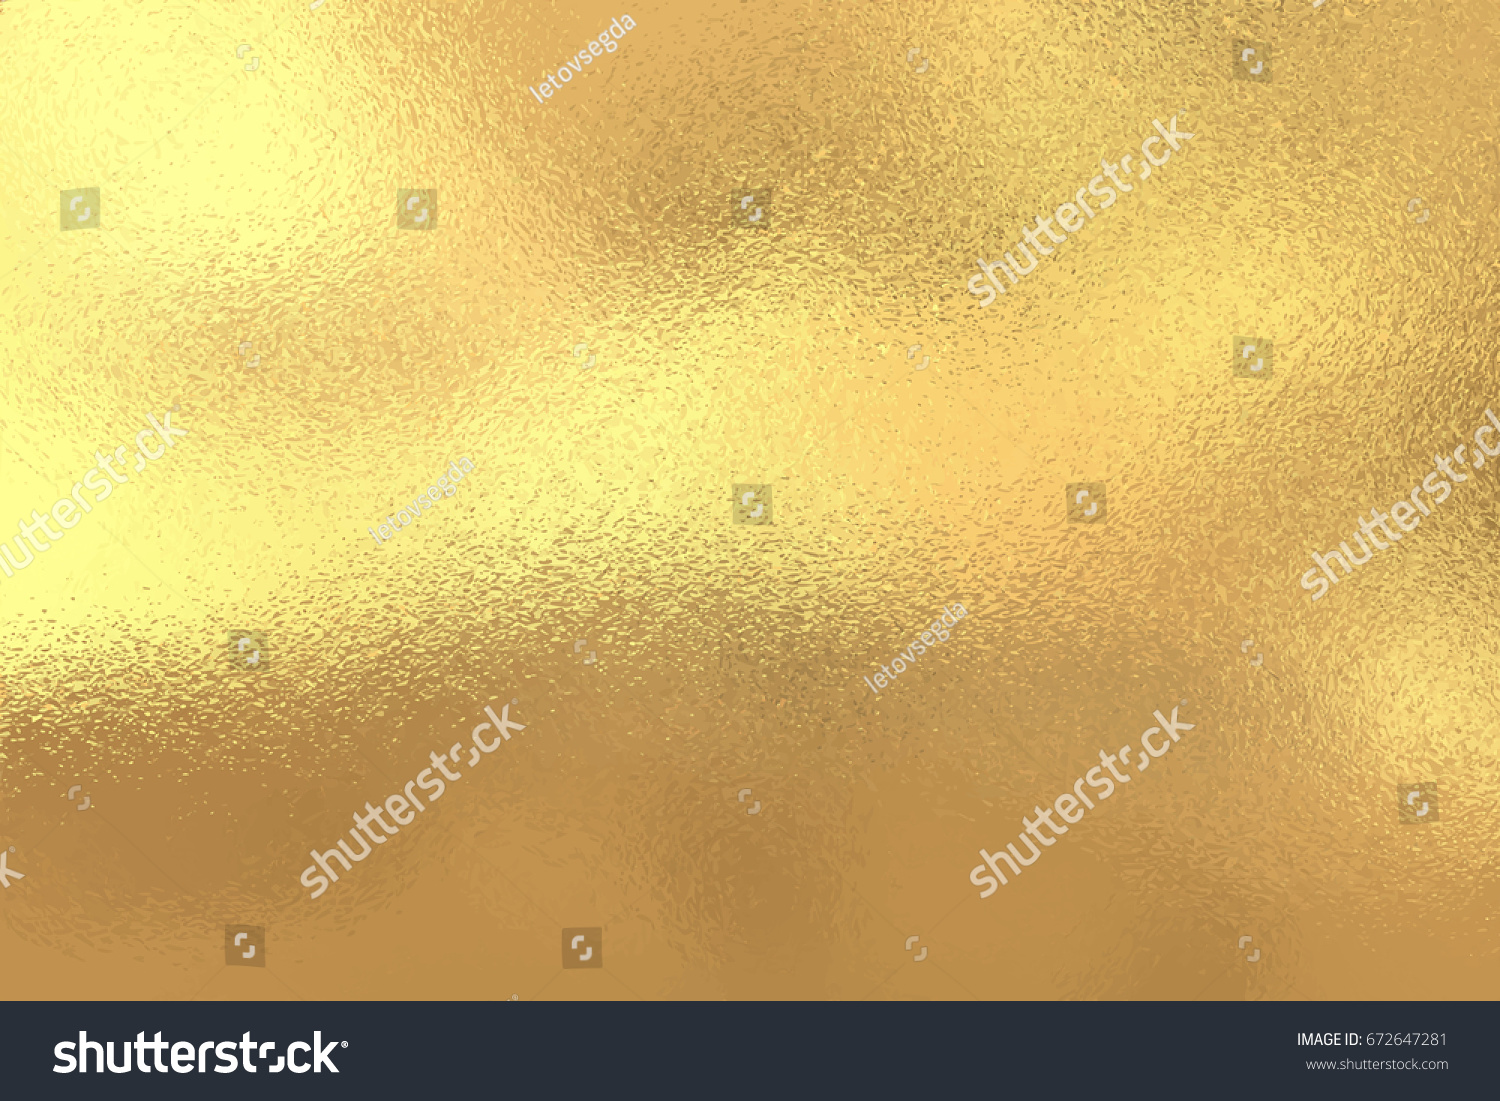 Gold foil texture background, Vector illustration #672647281